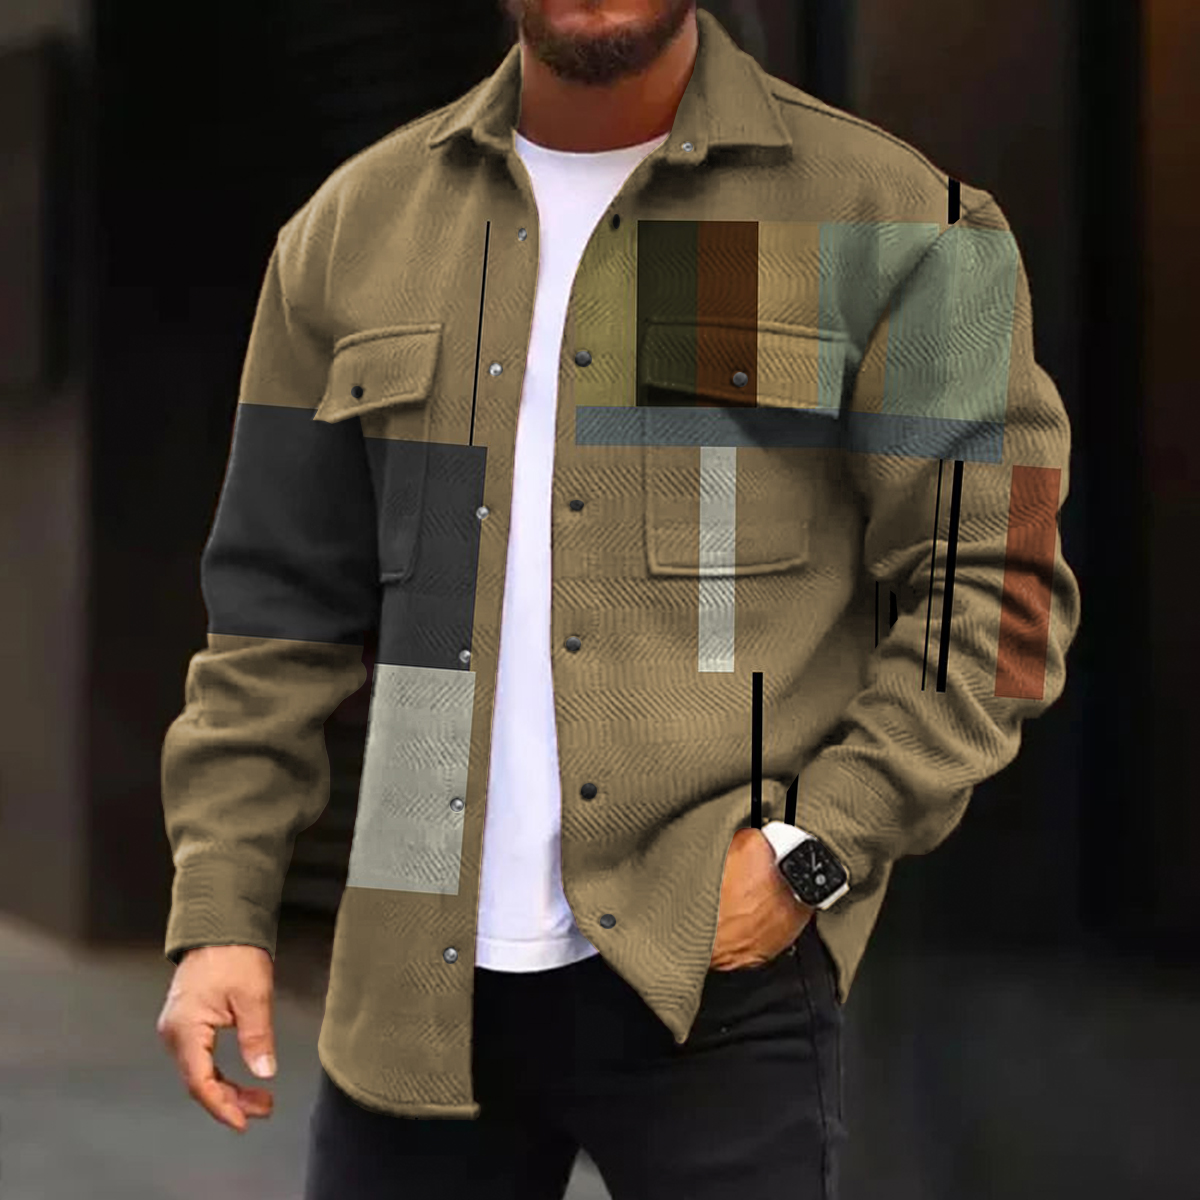 Men's Casual Jacket Retro Colorblock Pattern Long Sleeve Pockets Shirt Jacket